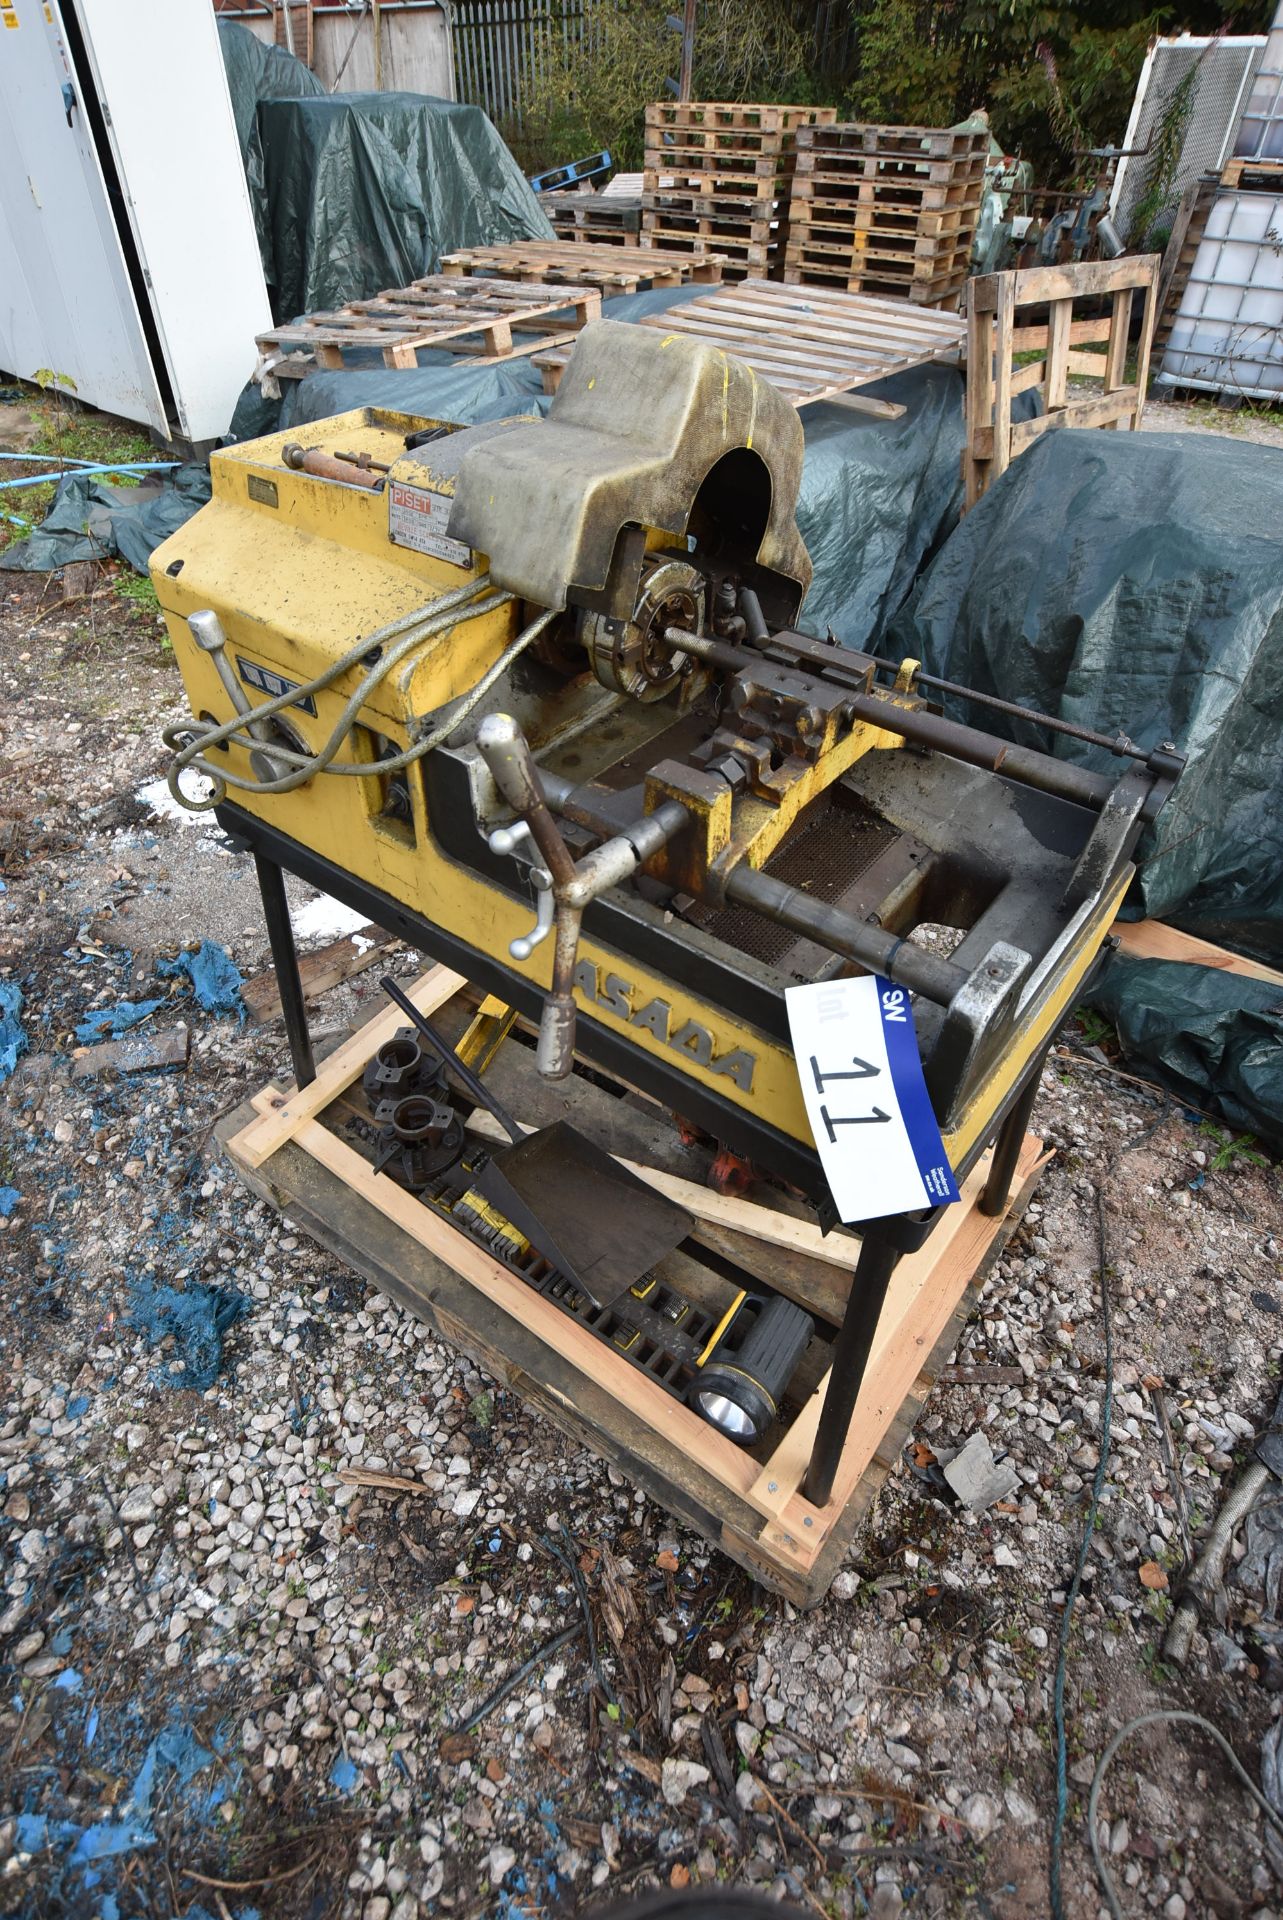 Piset BTM NO2 Pipe Threading Machine, serial no. 70080, 400V, with equipment on pallet